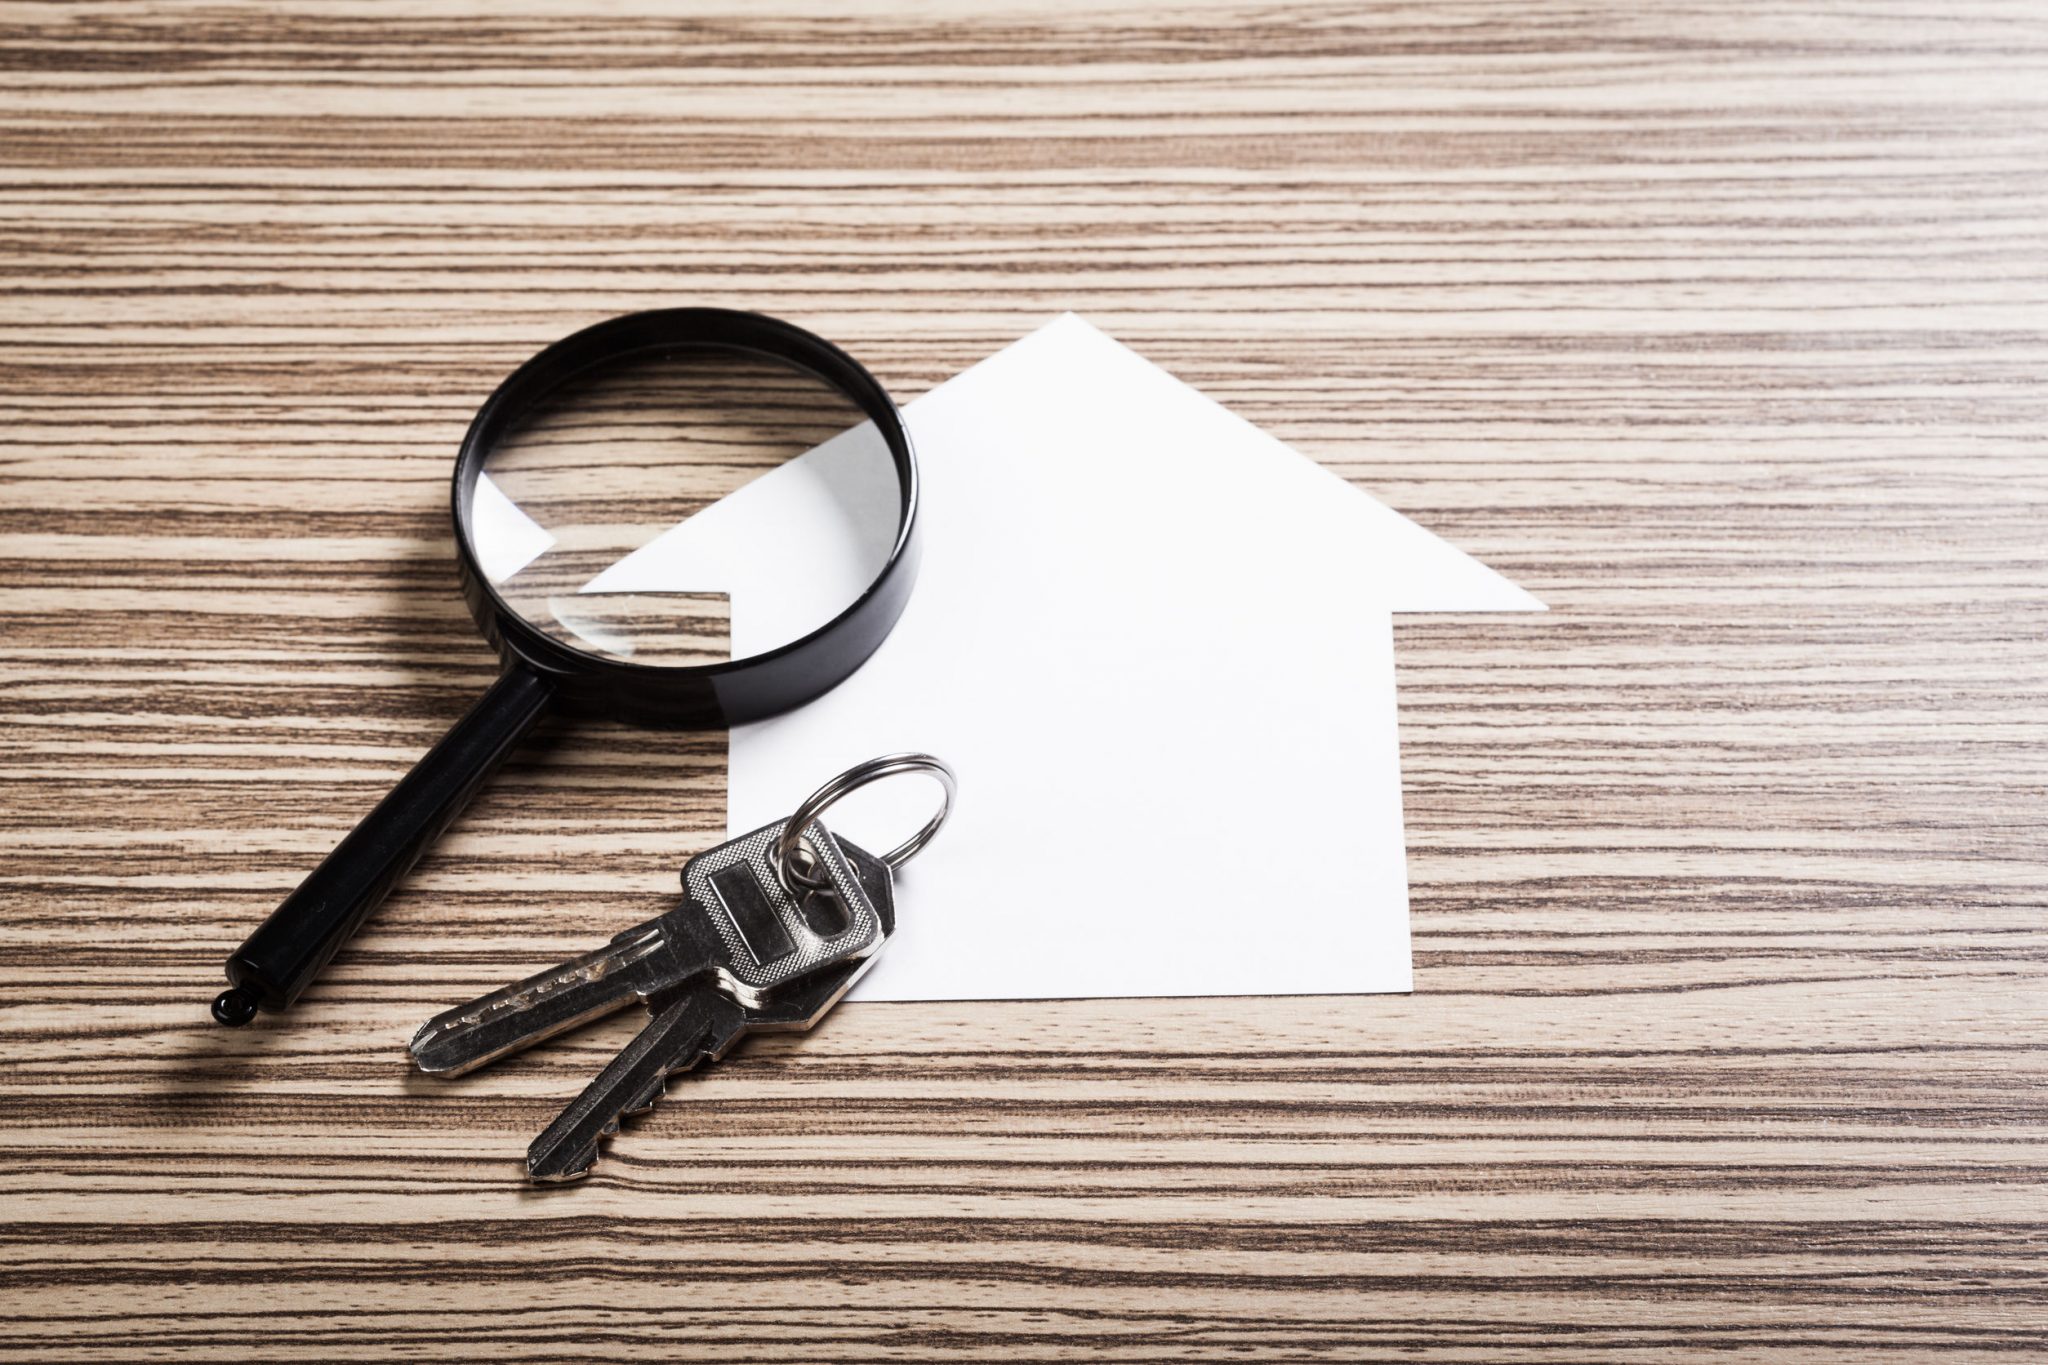 Joseph McBride on LinkedIn: Homeowners may consider using home